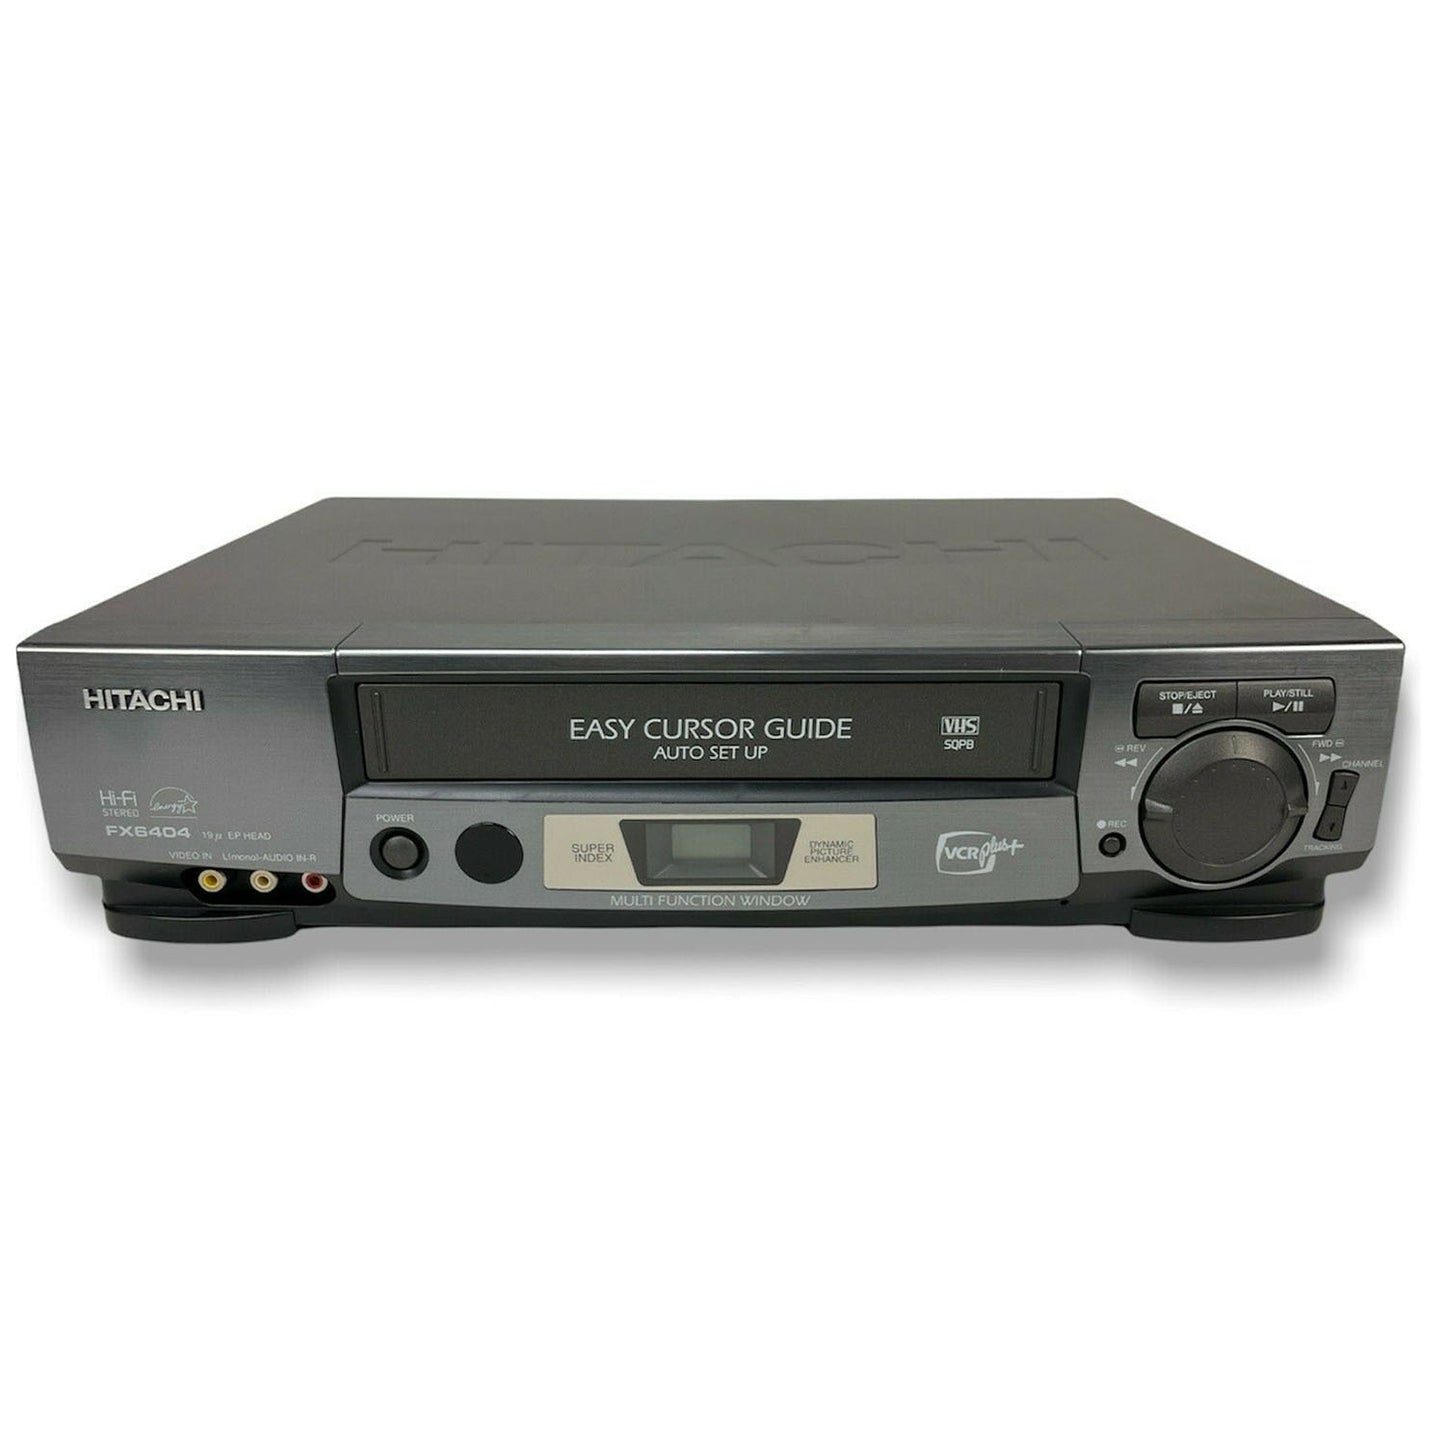 Hitachi VT-FX6404A VCR, 4-Head Hi-Fi Stereo